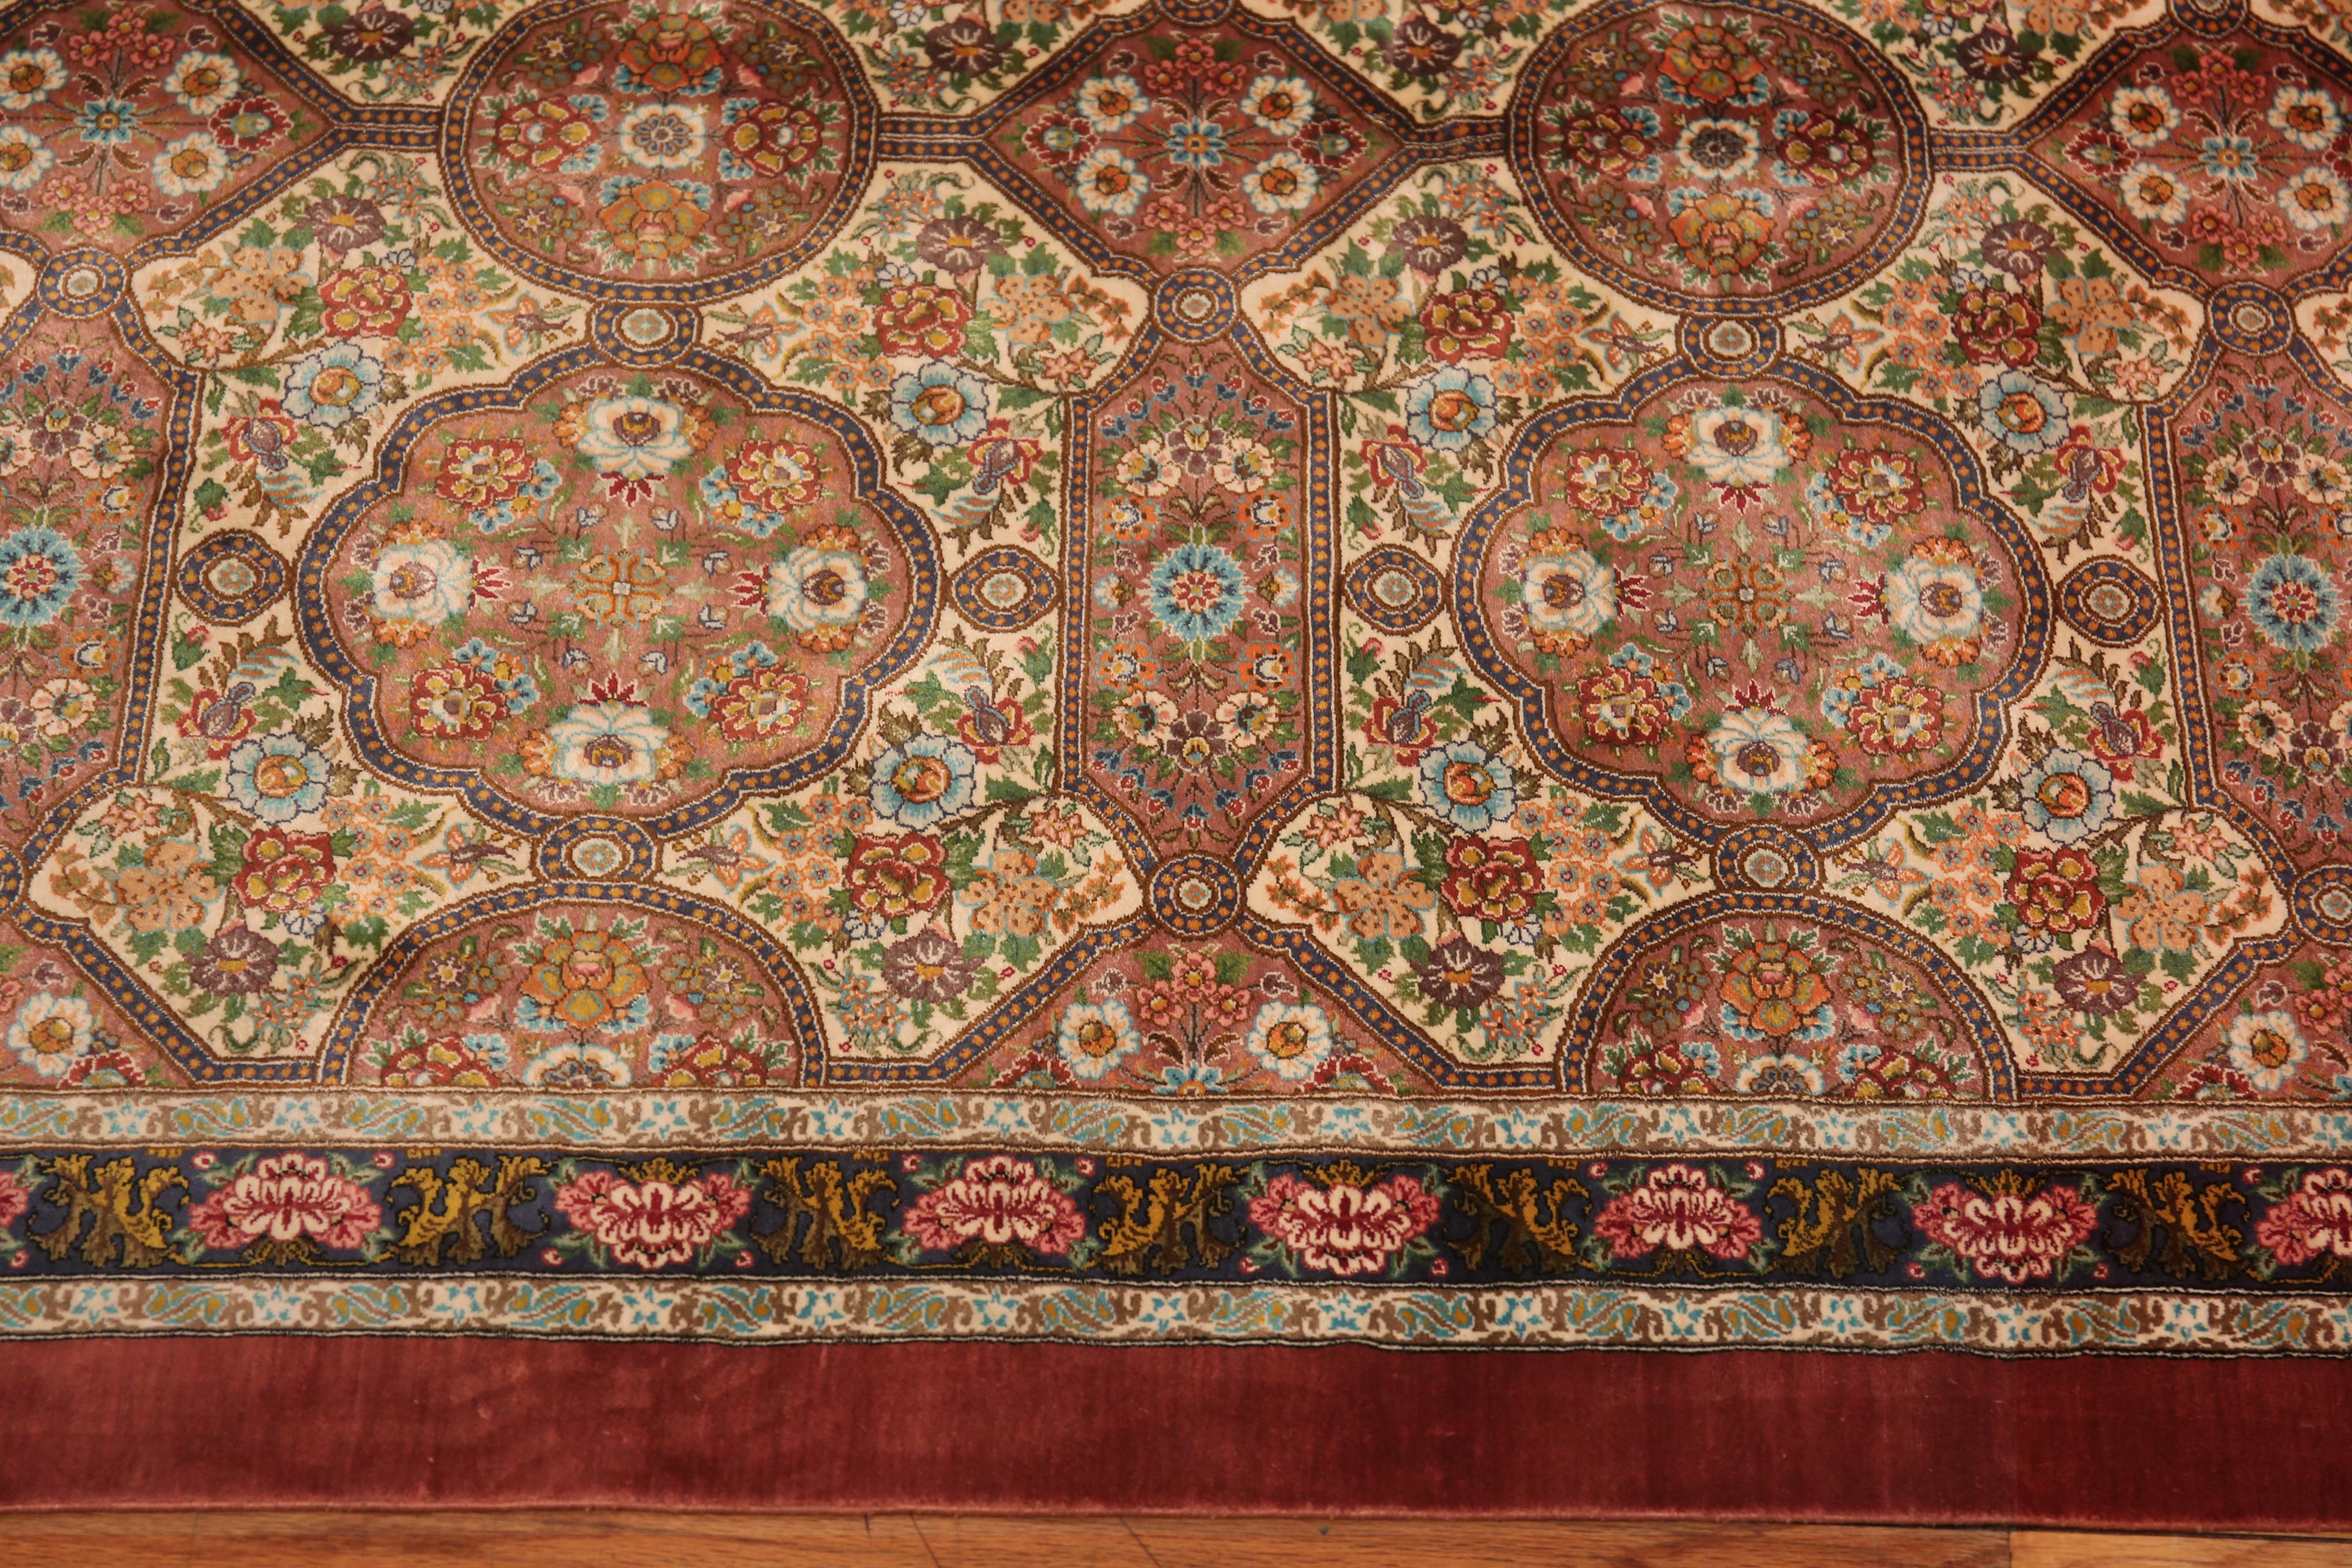 20th Century Magnificent Intricate Floral Vintage Persian Silk Qum Runner Rug 3'7